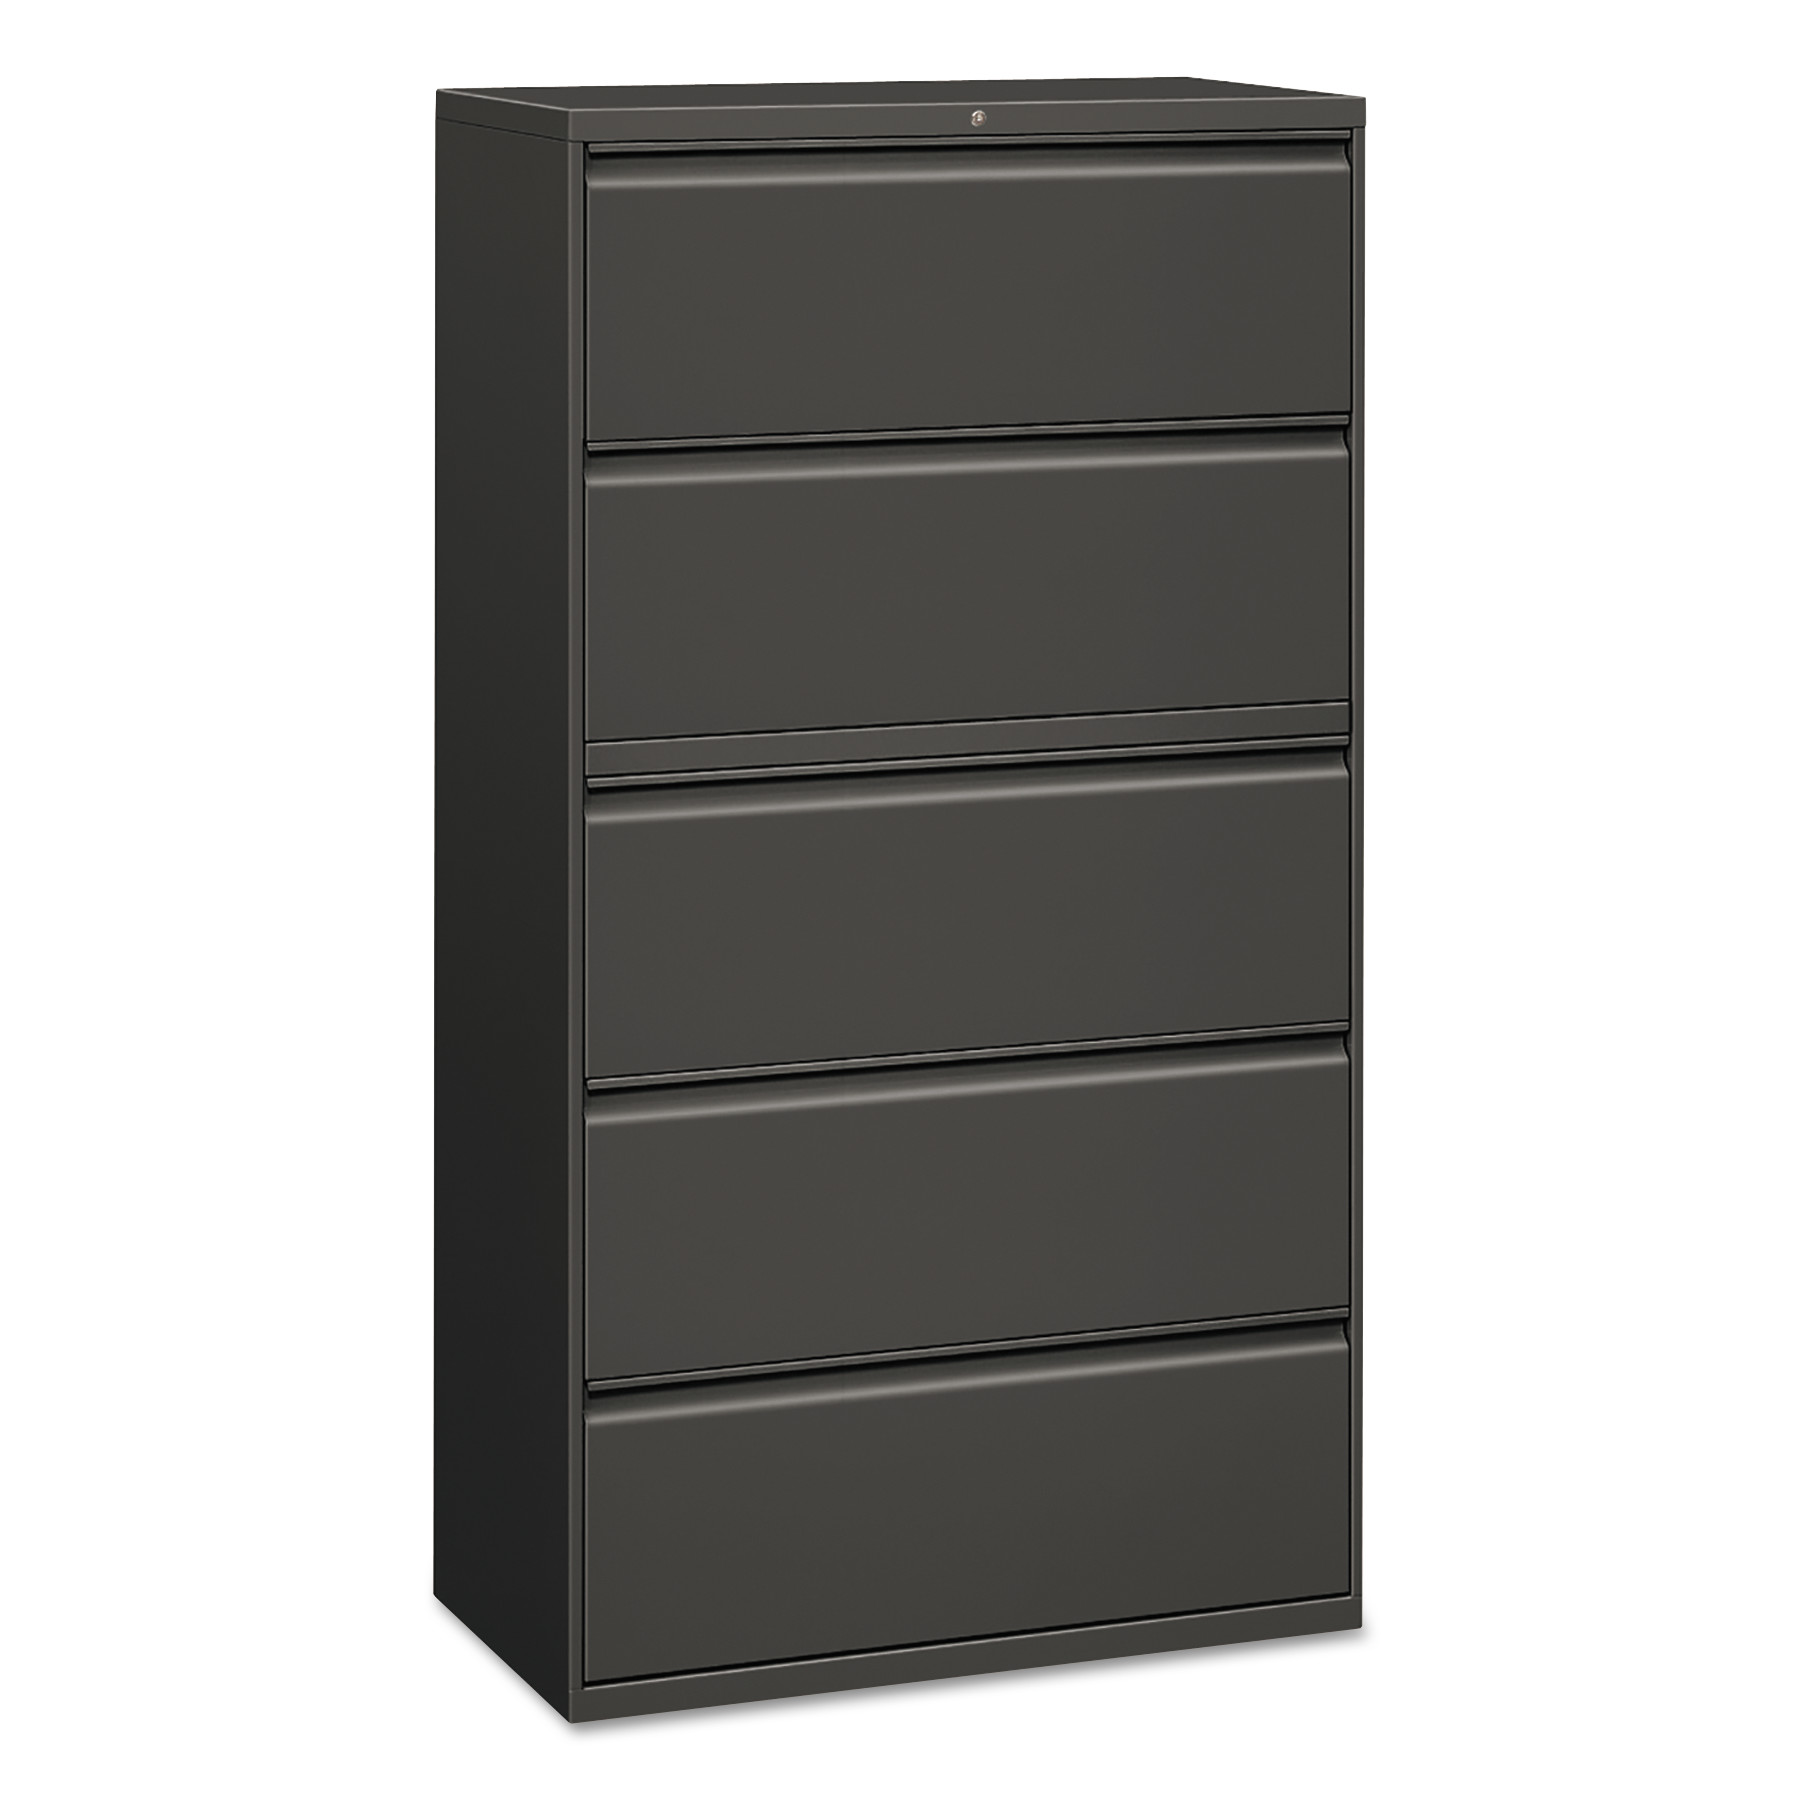  Alera ALELF3667CC Five-Drawer Lateral File Cabinet, 36w x 18d x 64.25h, Charcoal (ALELF3667CC) 